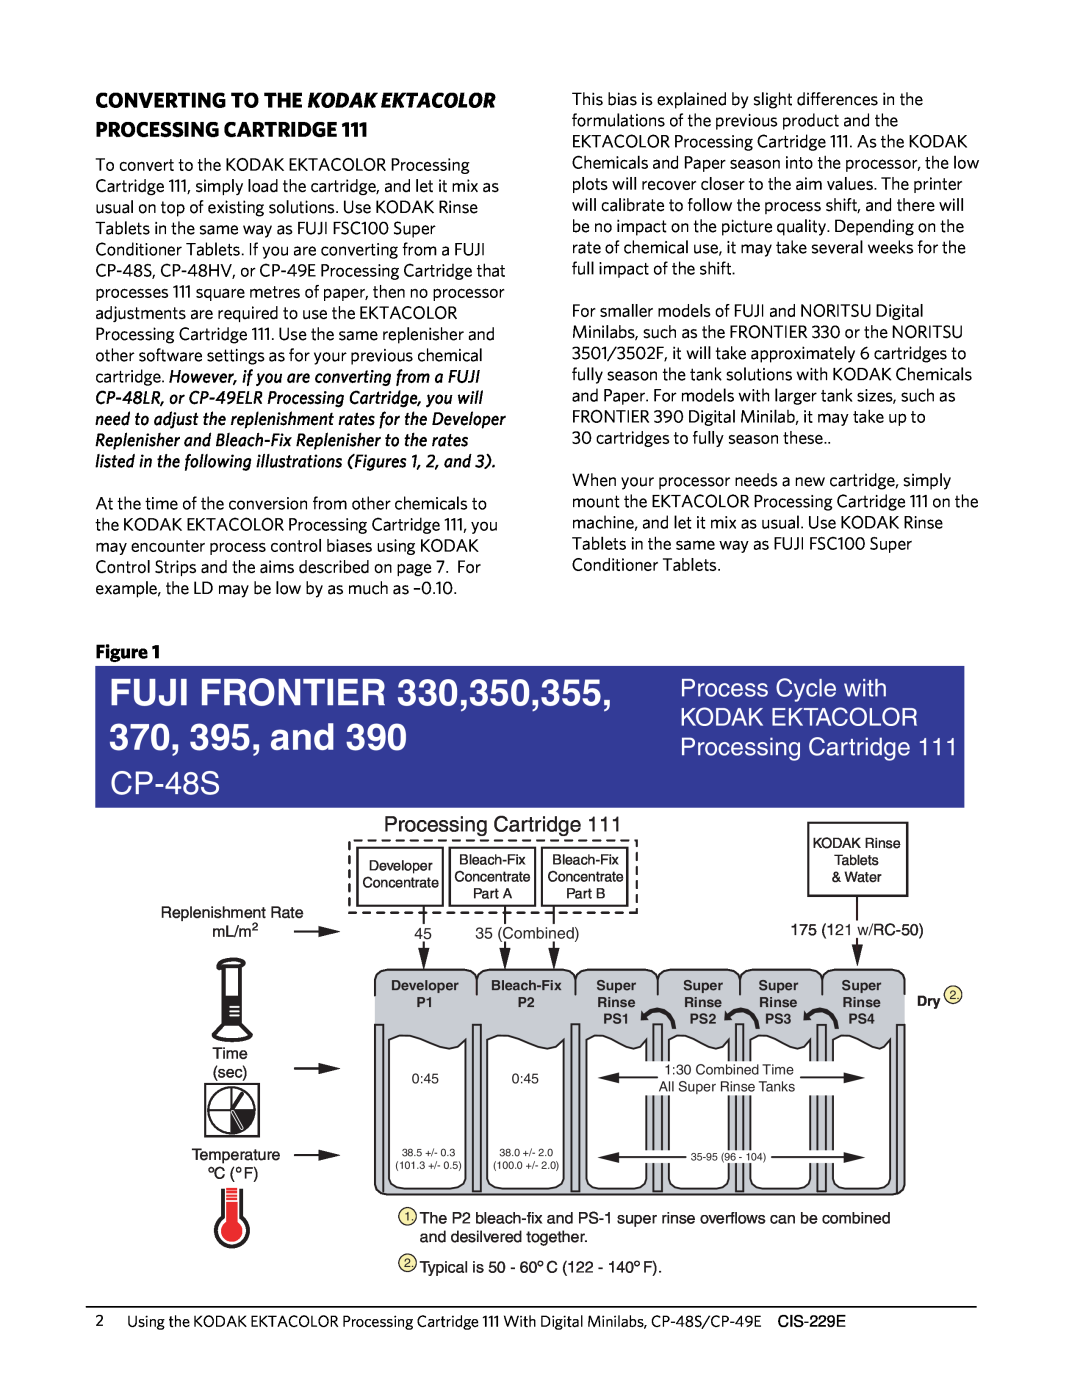 Kodak CP-48S manual FUJI FRONTIER 330,350,355, 370, 395, and, Process Cycle with, KODAK EKTACOLOR Processing Cartridge 